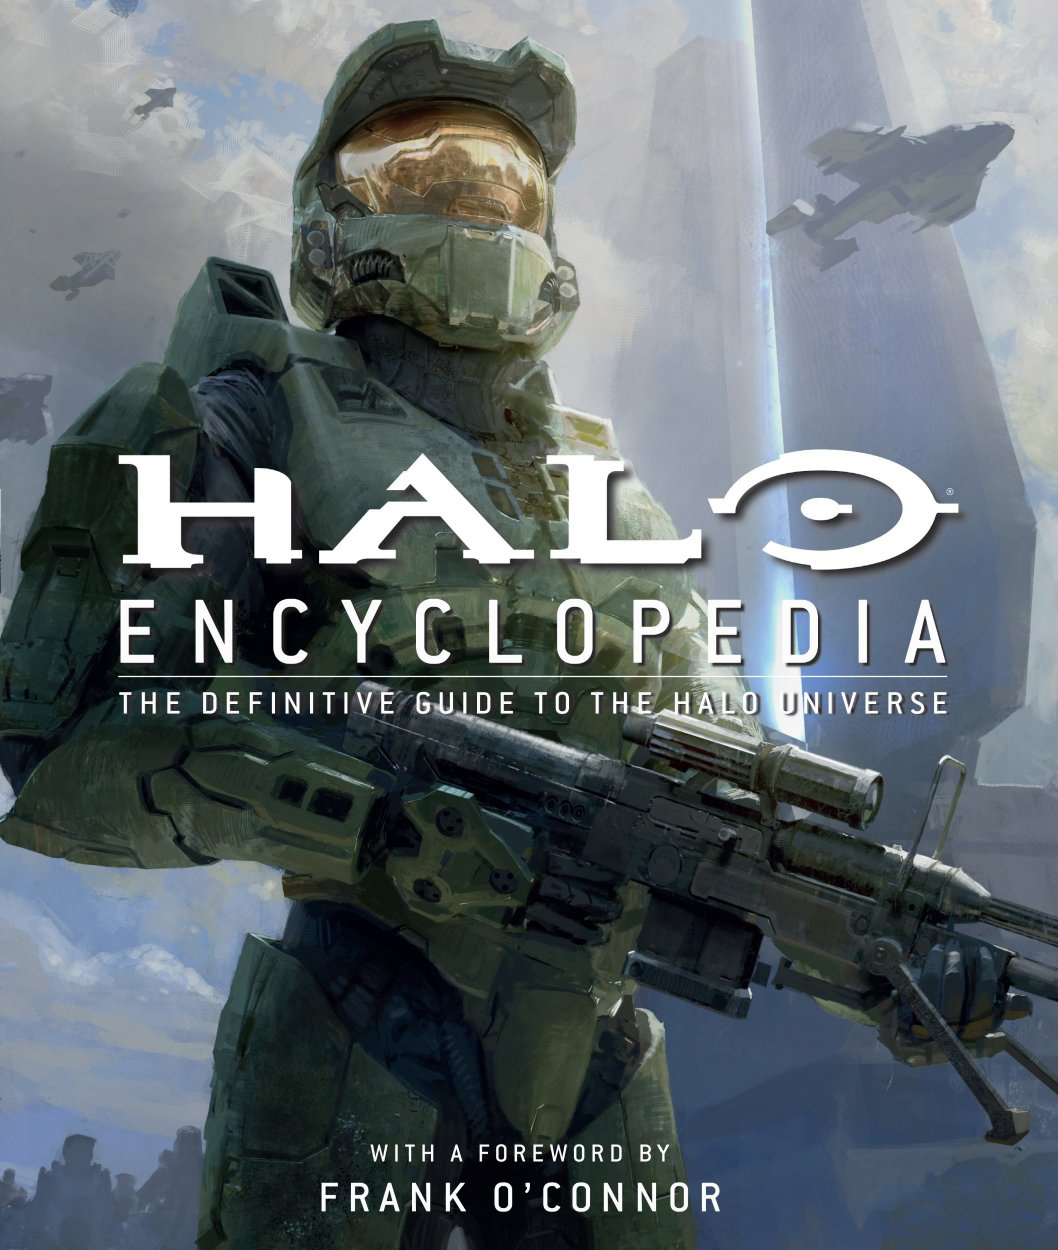 Halo: The Thursday War - Novel - Halopedia, the Halo wiki